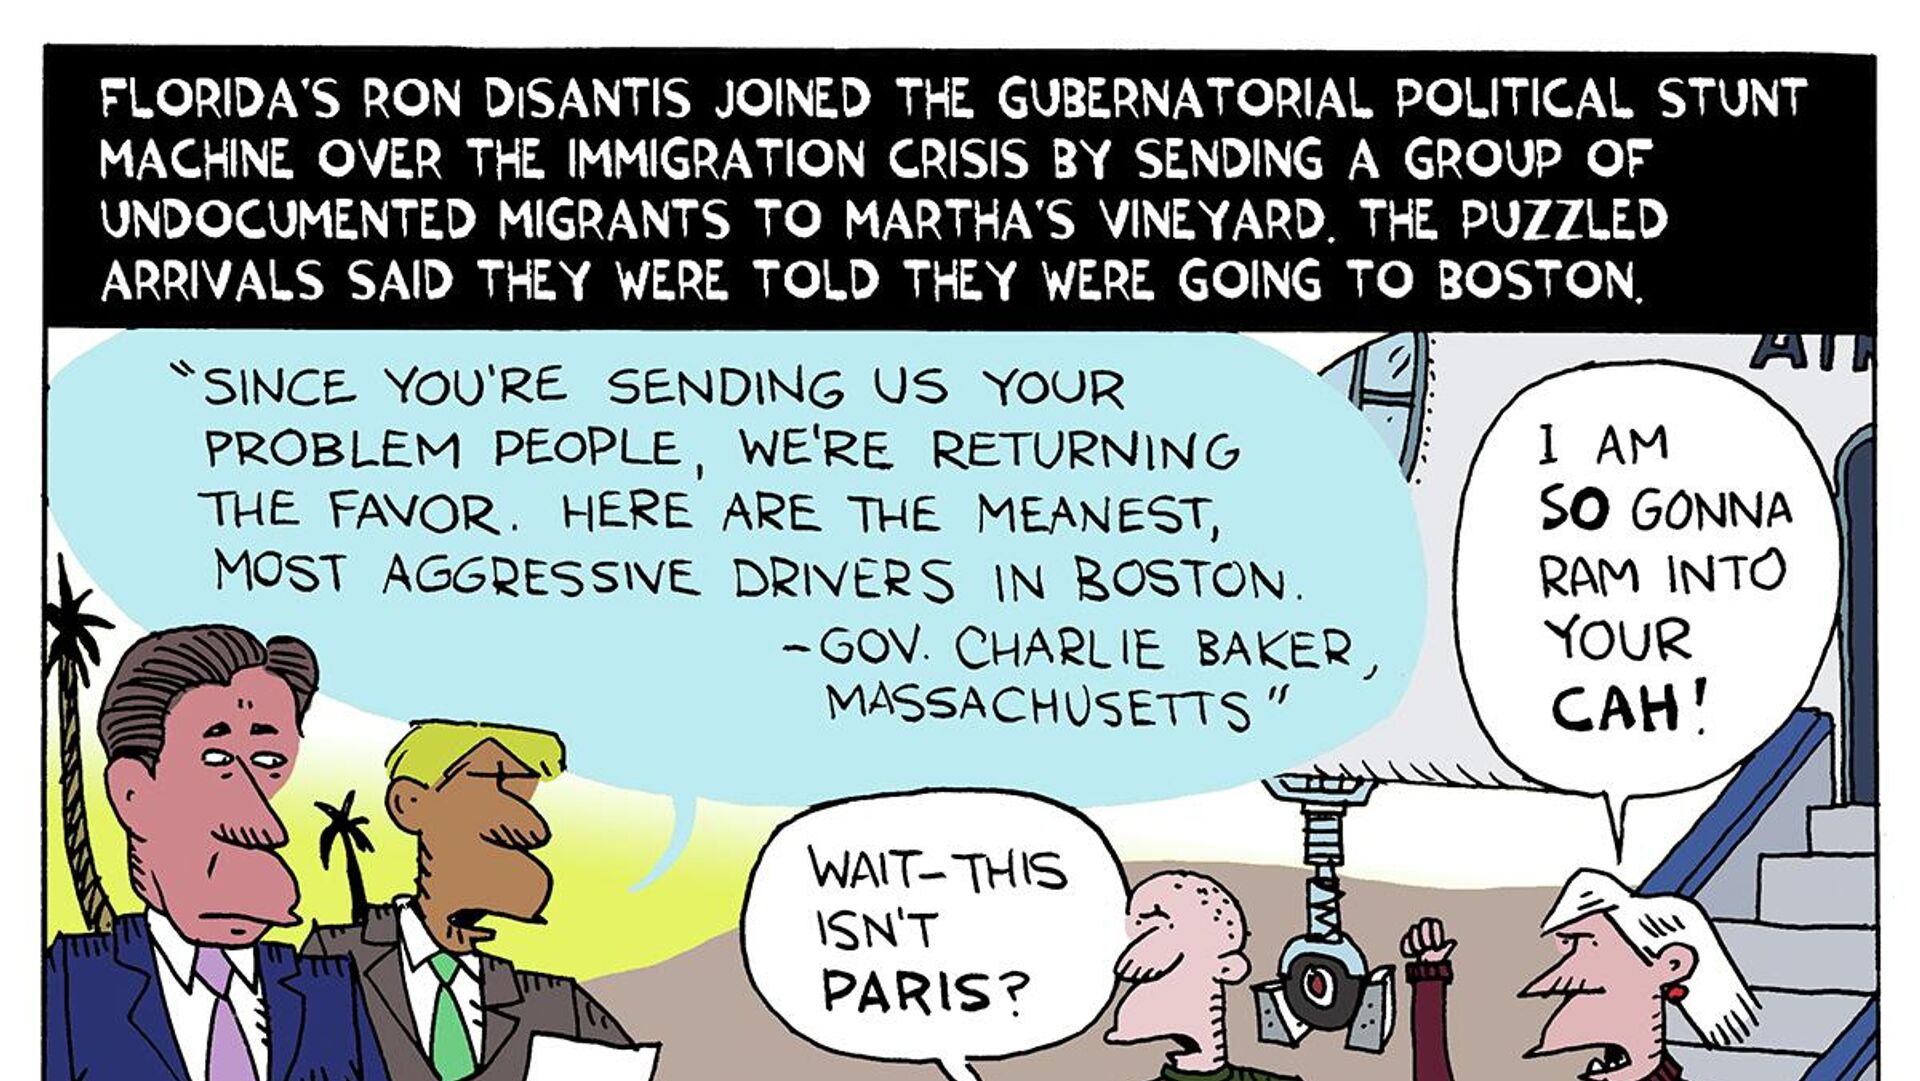 Ron Desantis flys migrants to Martha's vineyard - Sputnik International, 1920, 17.09.2022